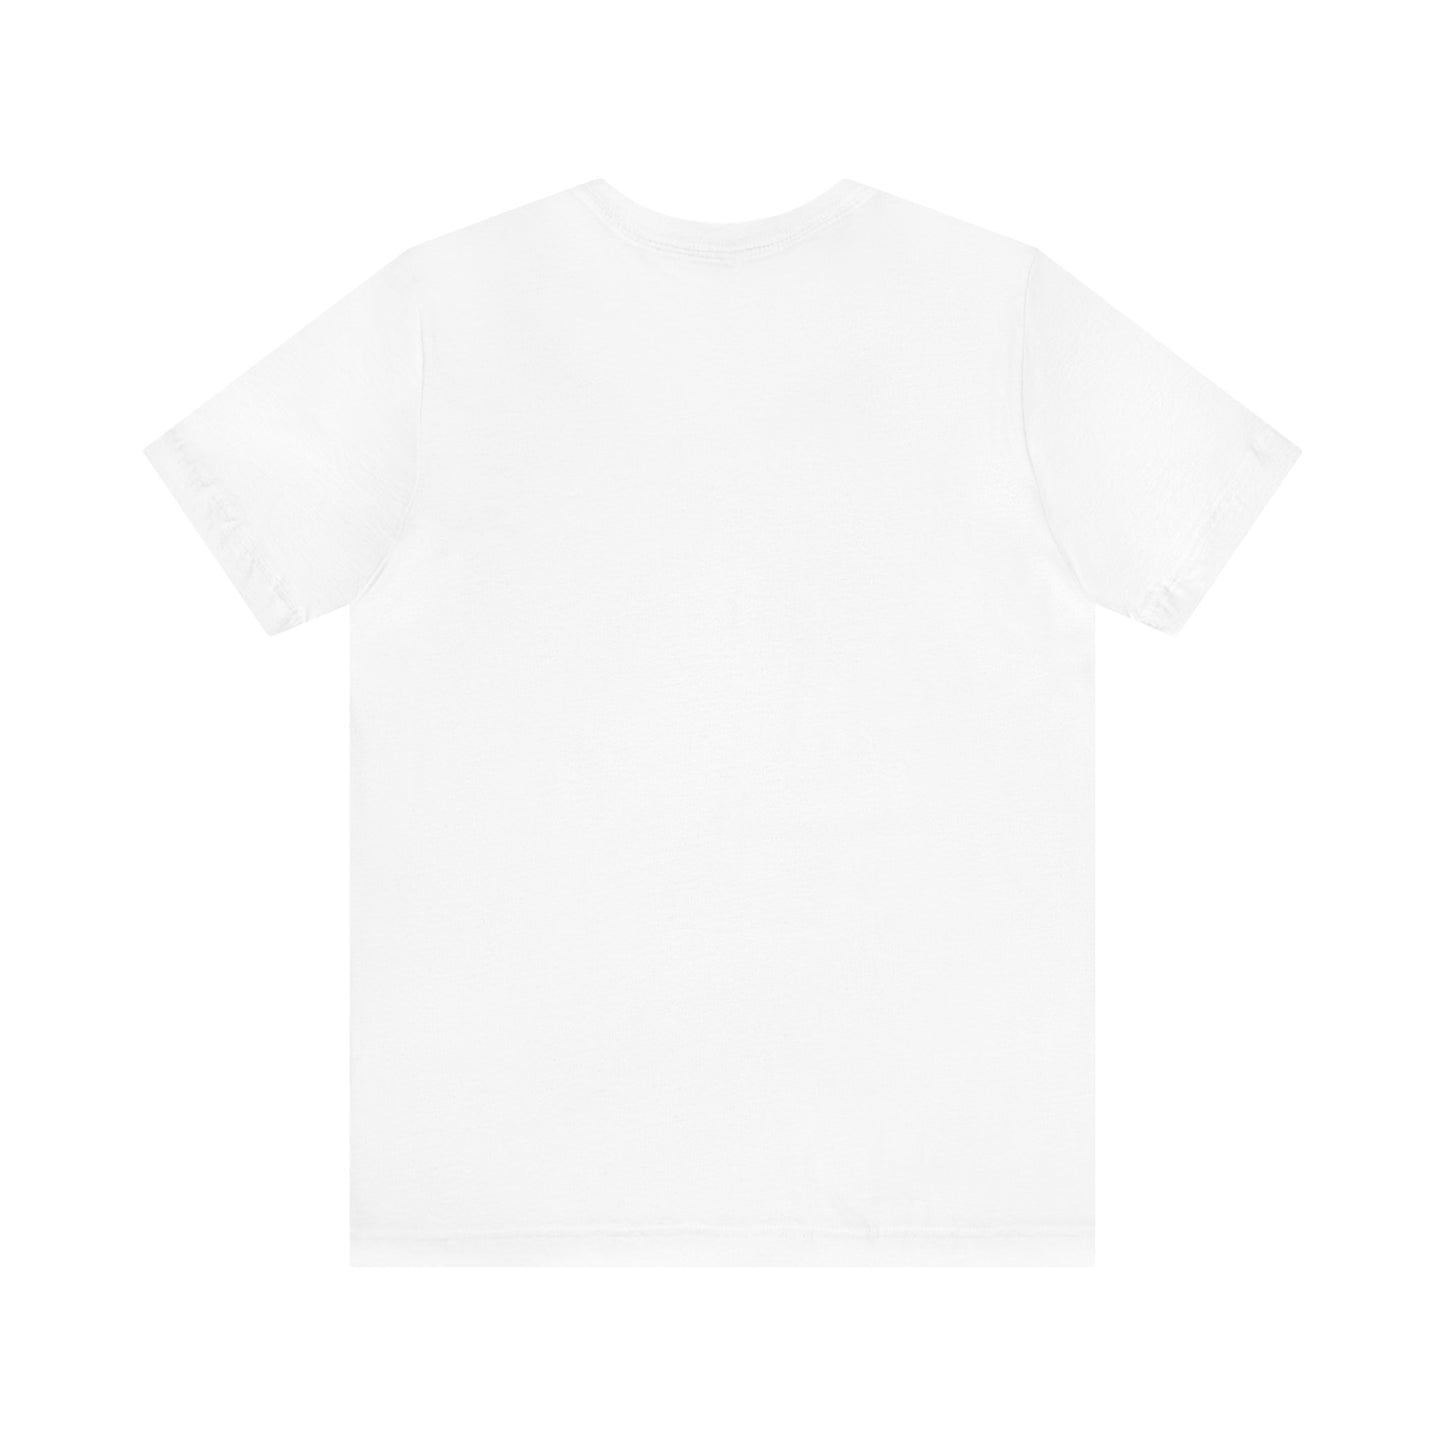 Abbeville, AL Unisex T-shirt Swirl